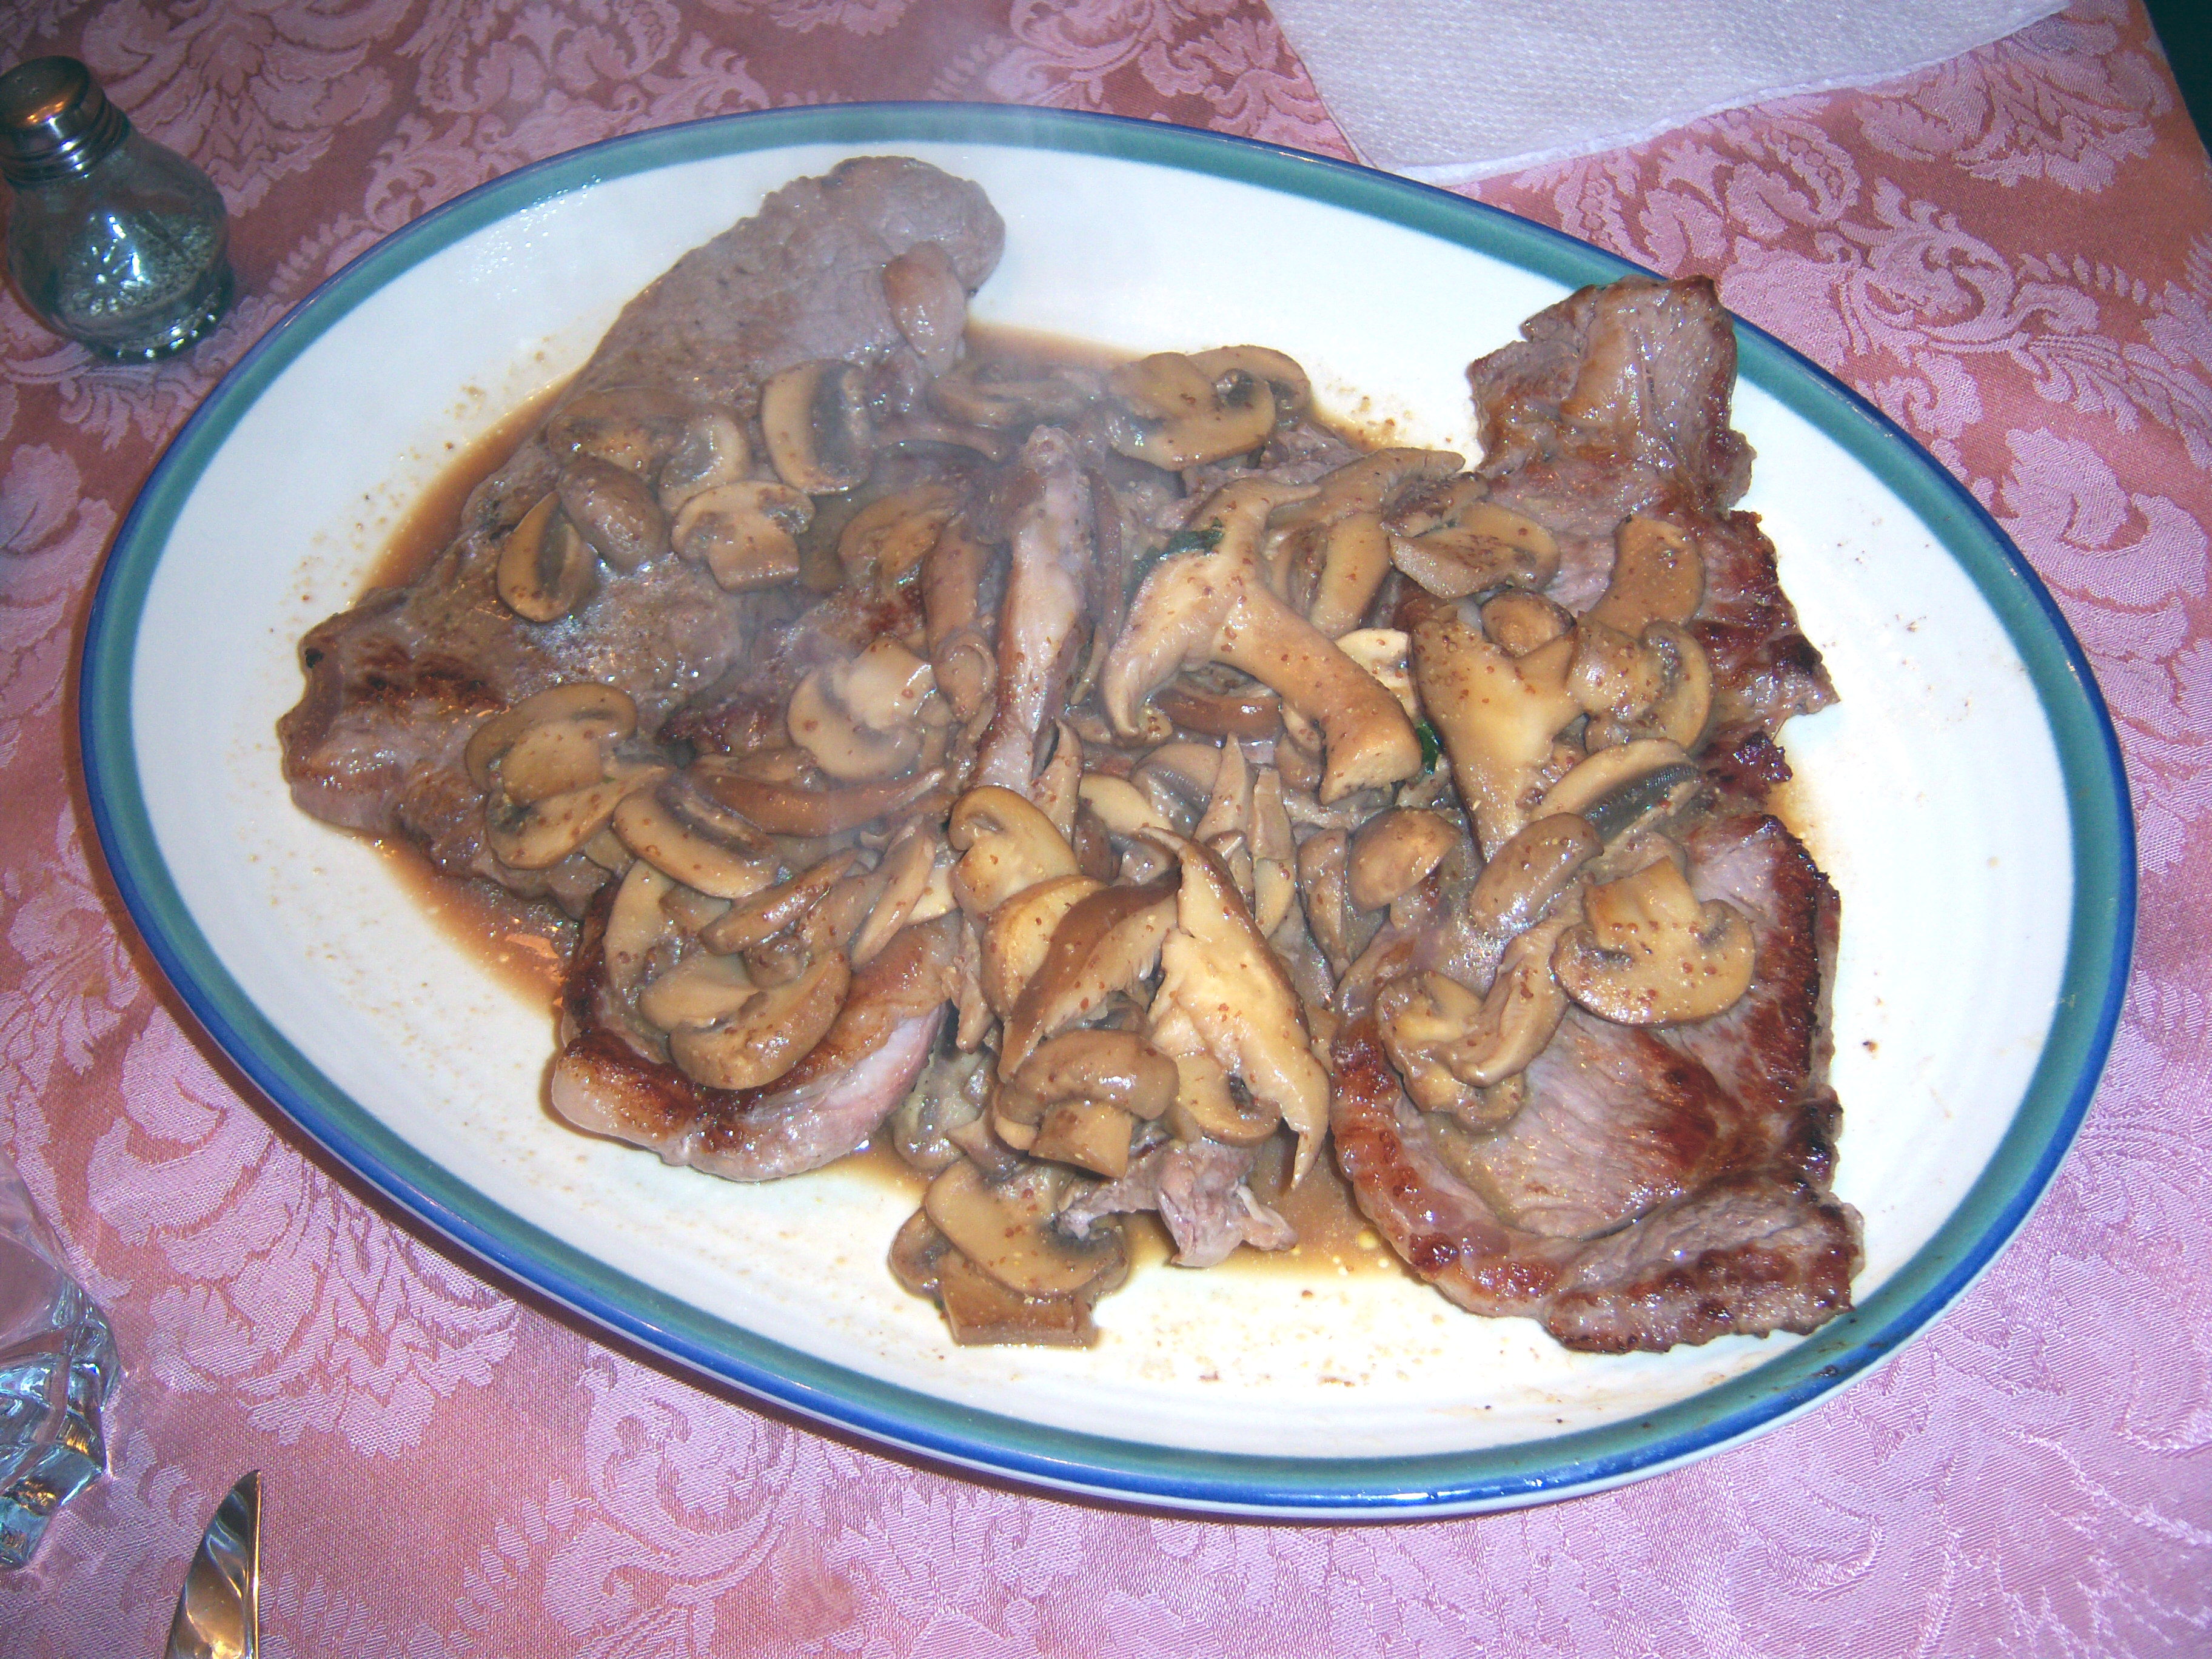 Steak and mushrooms